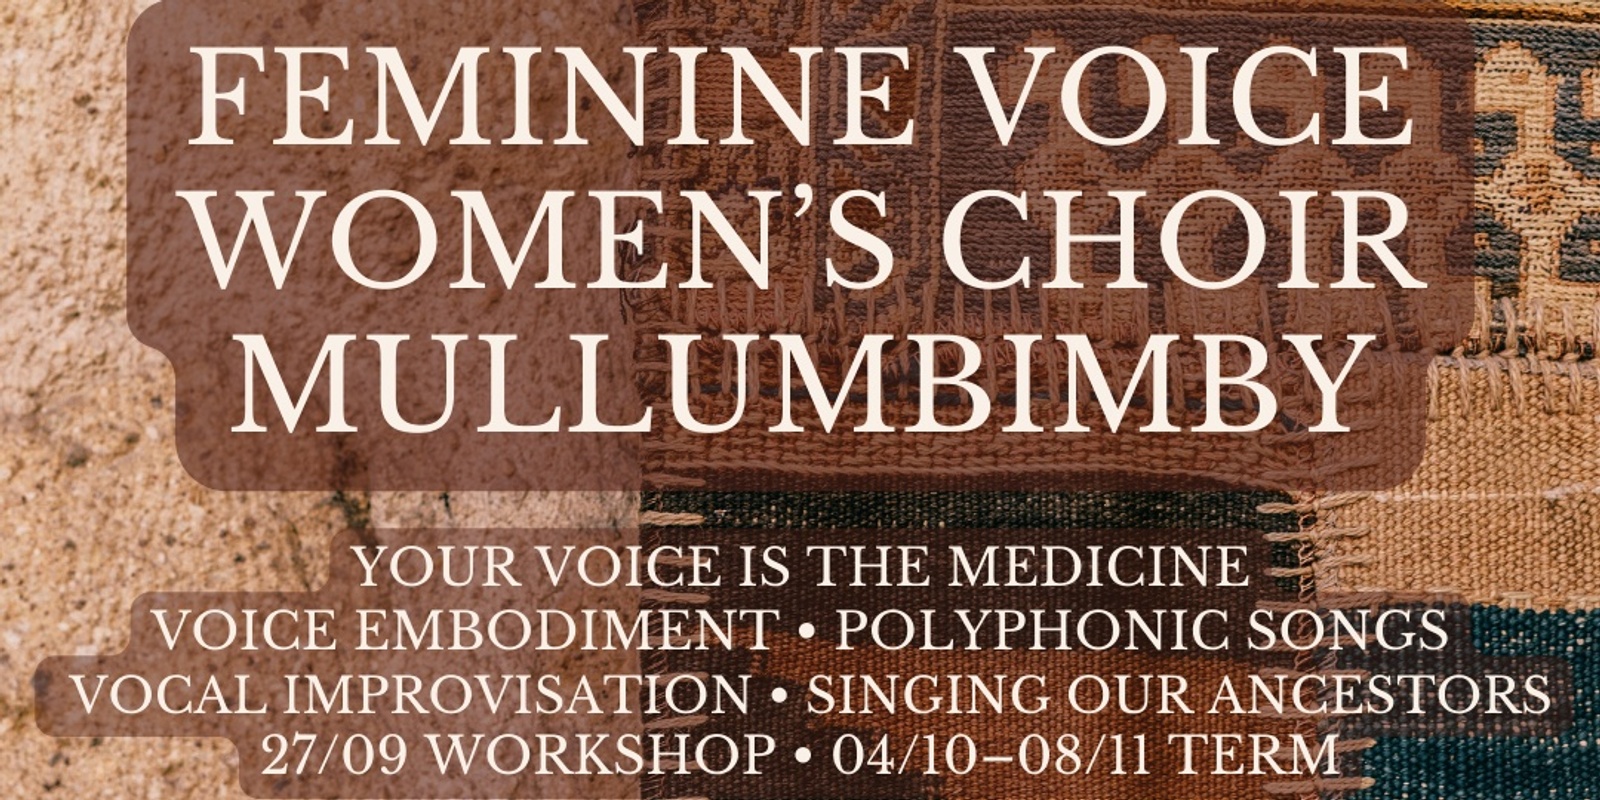 Banner image for Feminine Voice – Women's choir Mullumbimby